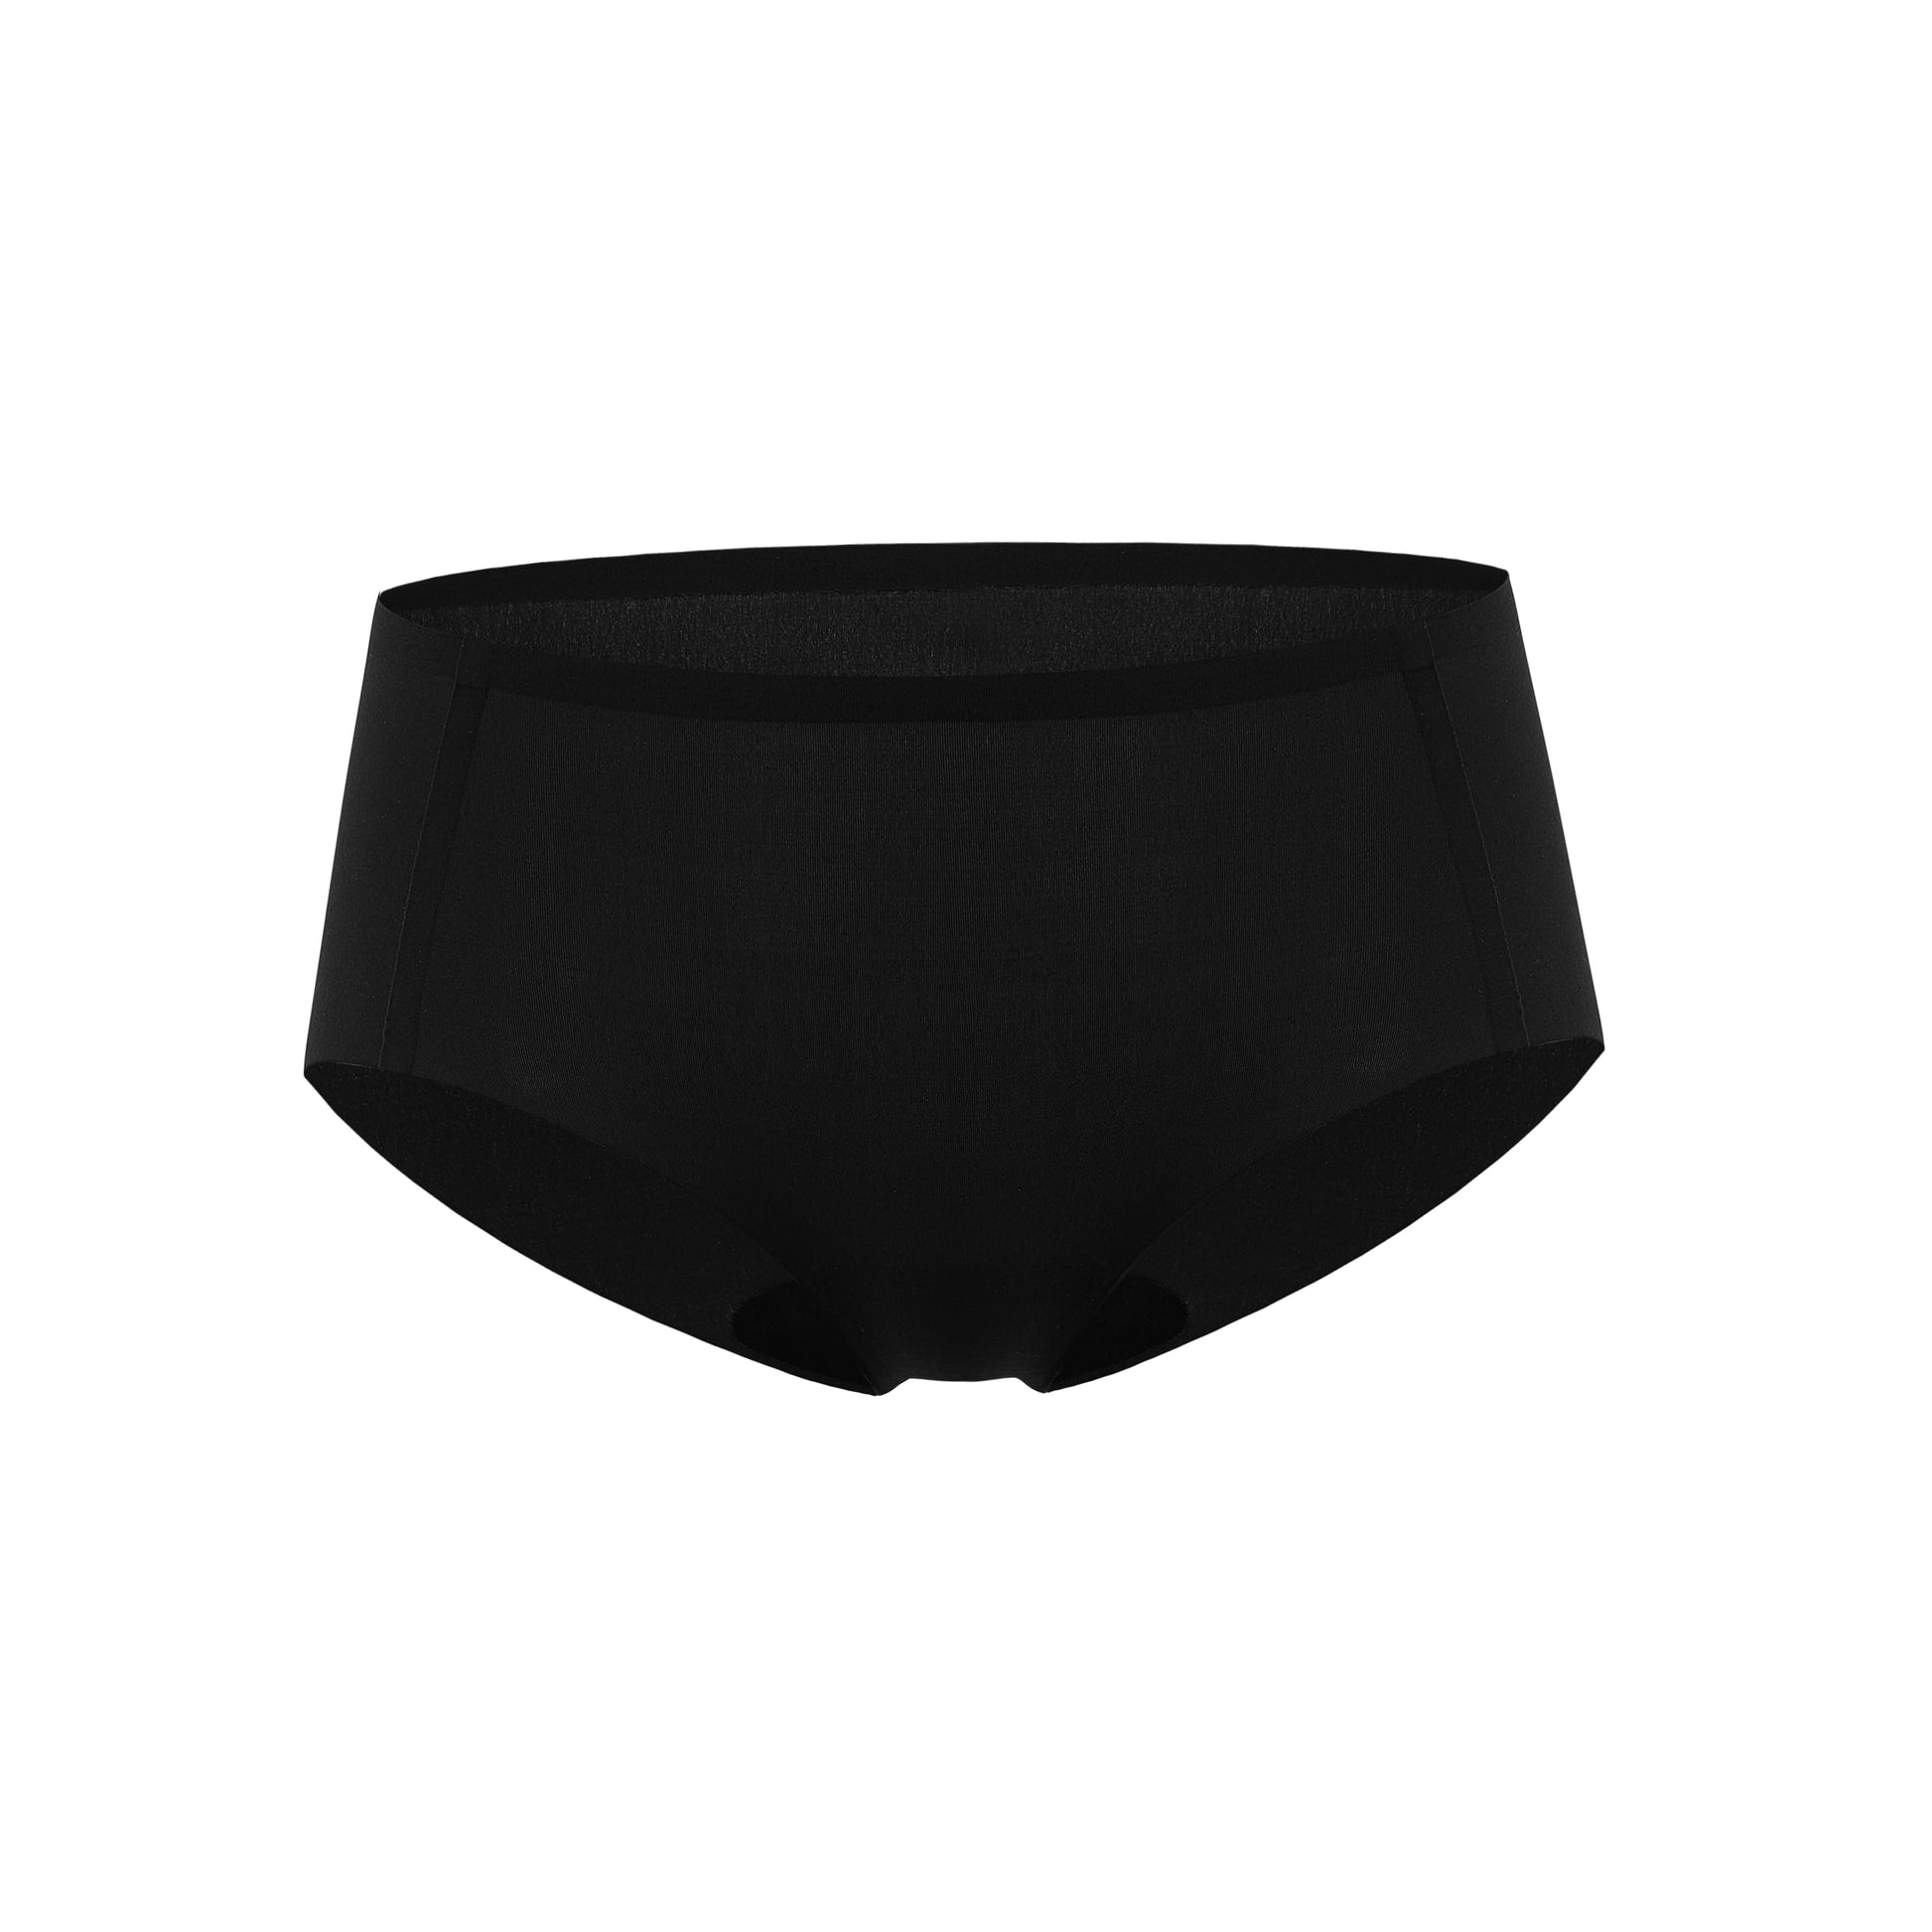 Flat lay image of Black underwear